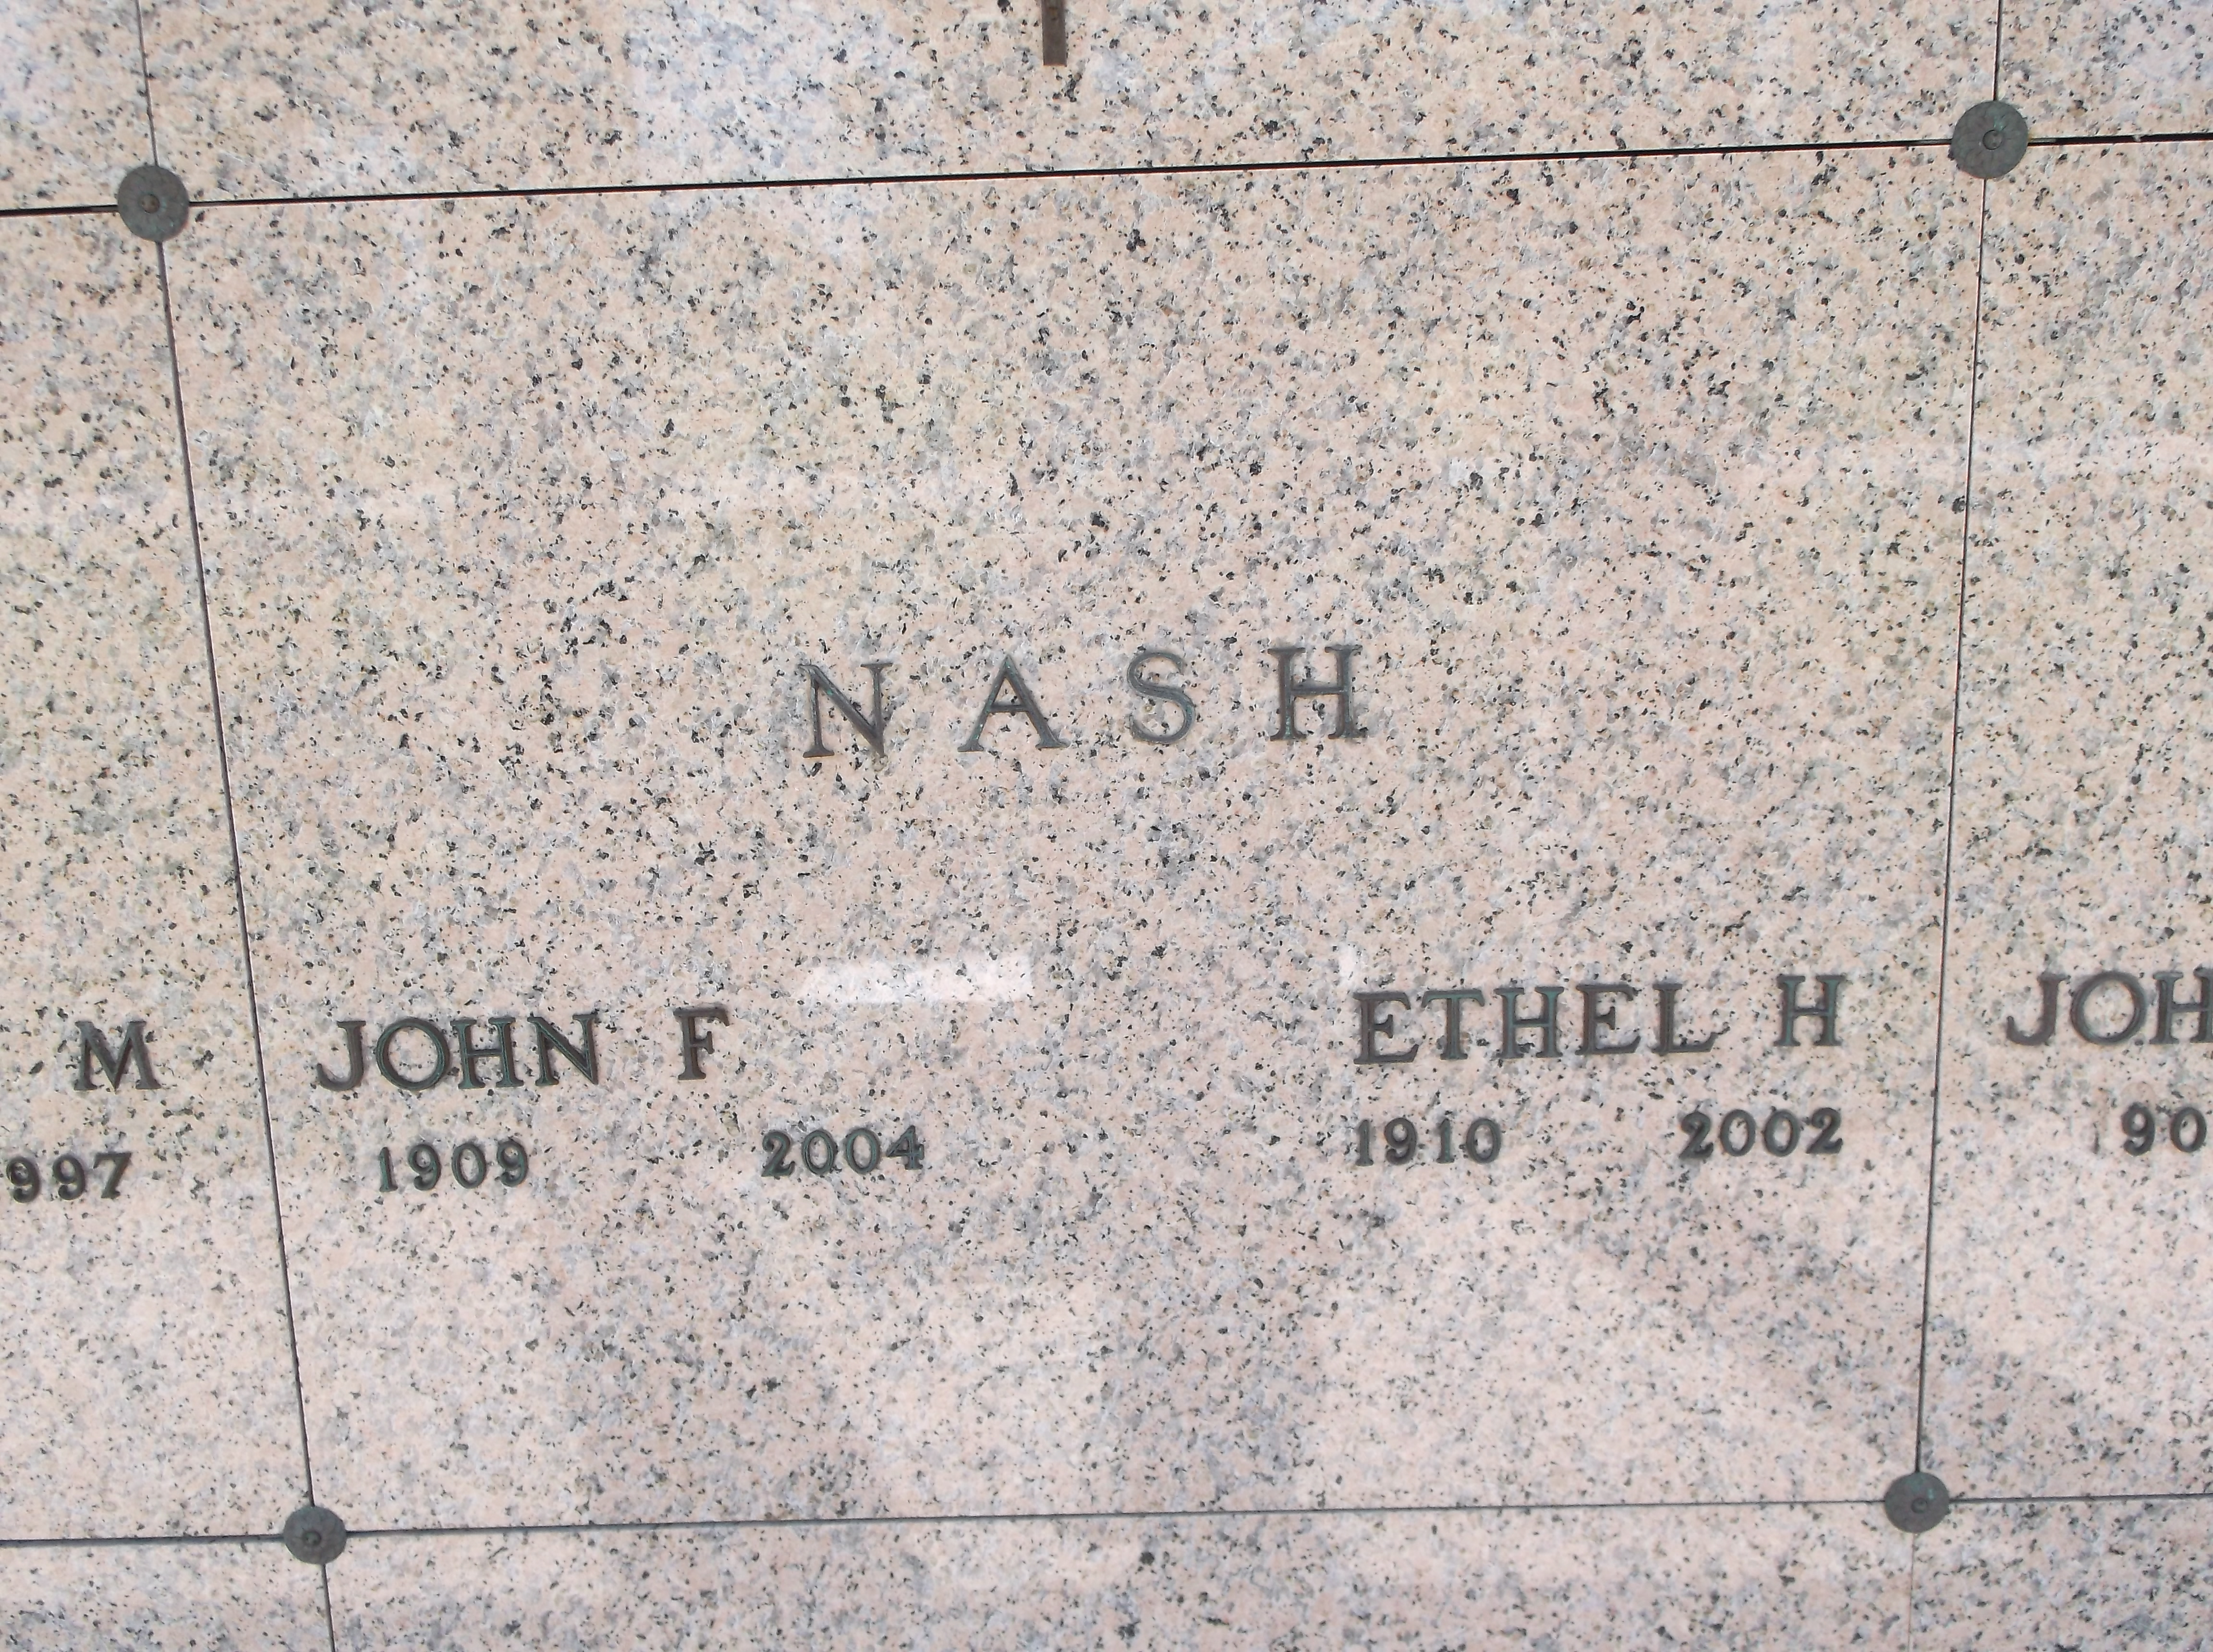 Ethel H Nash